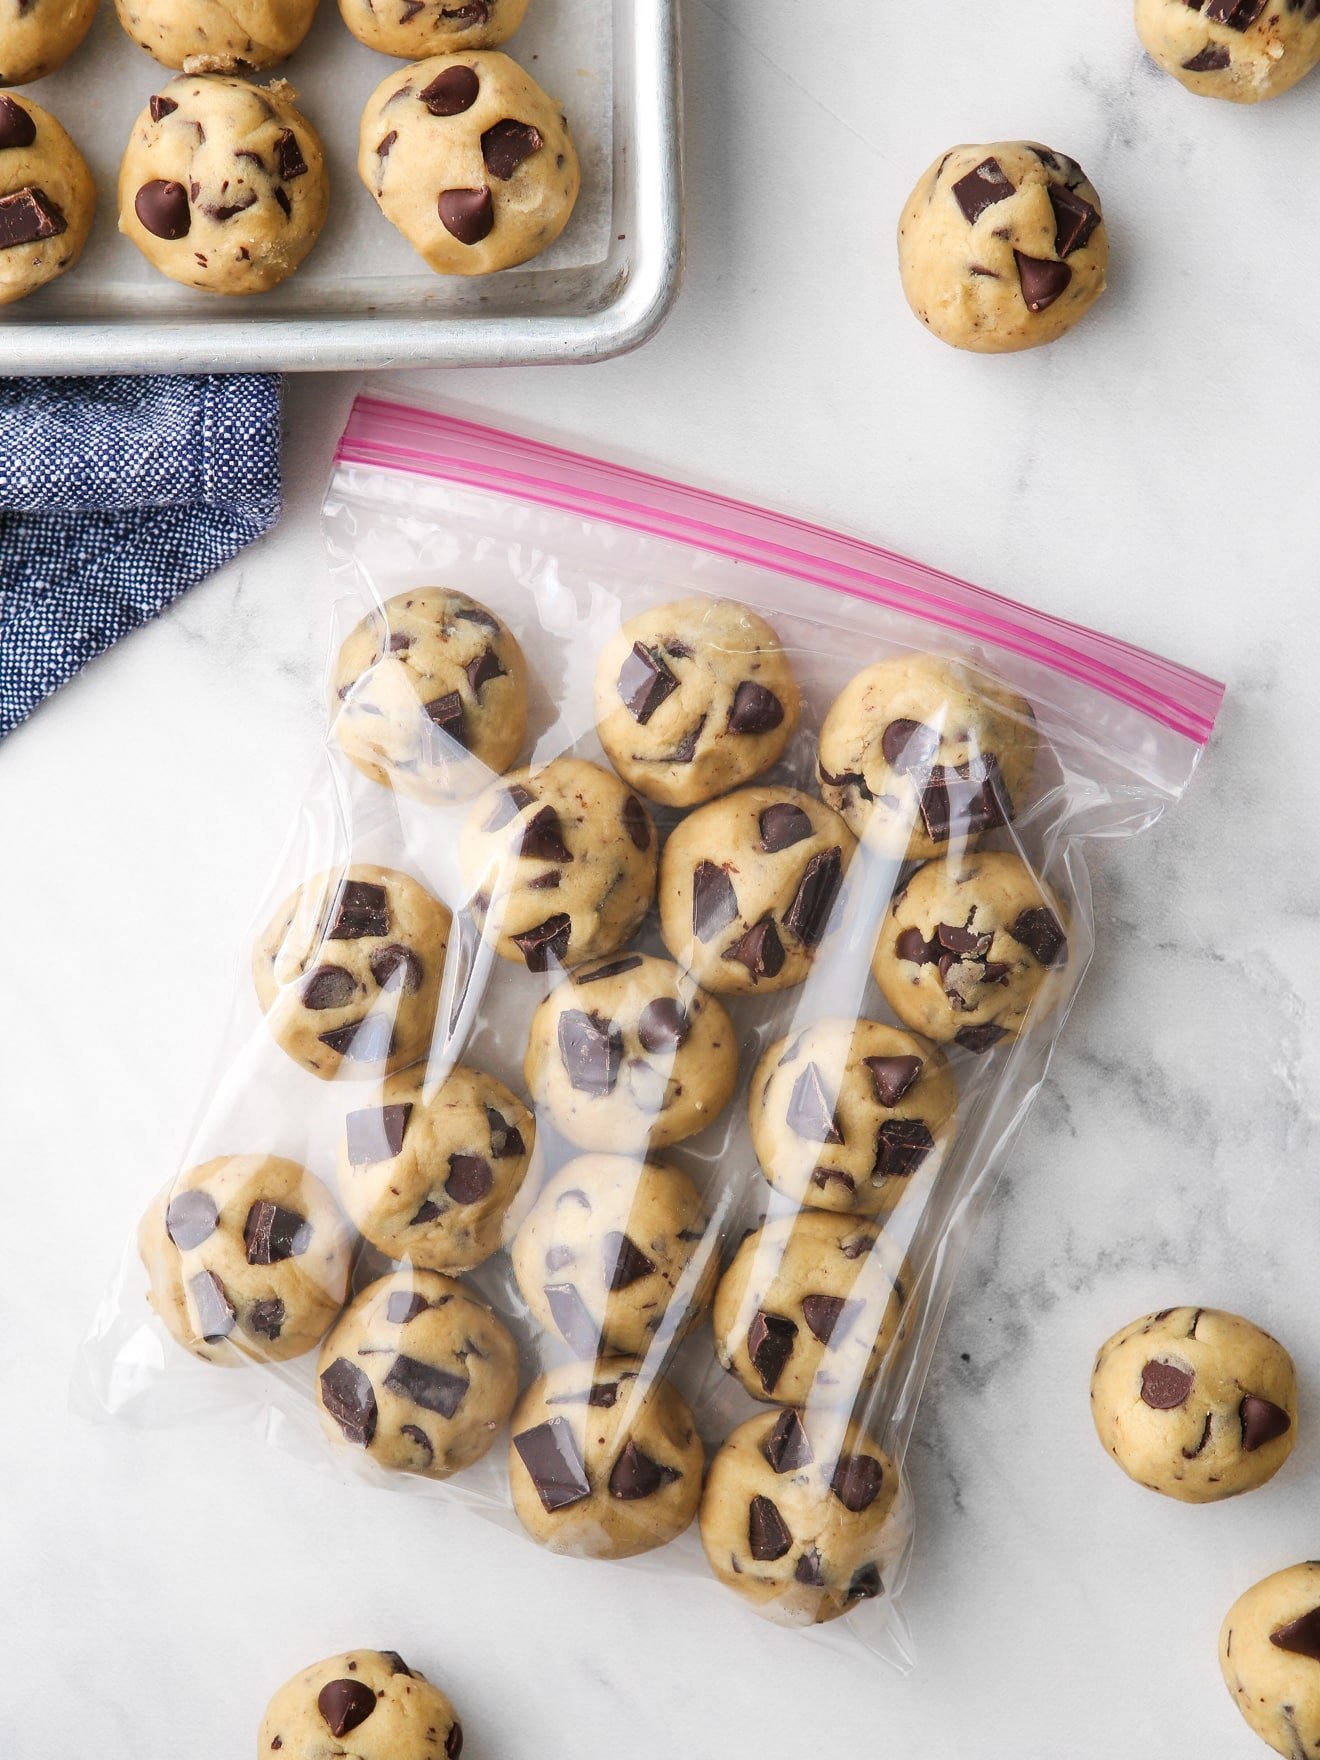 How to Freeze Cookies